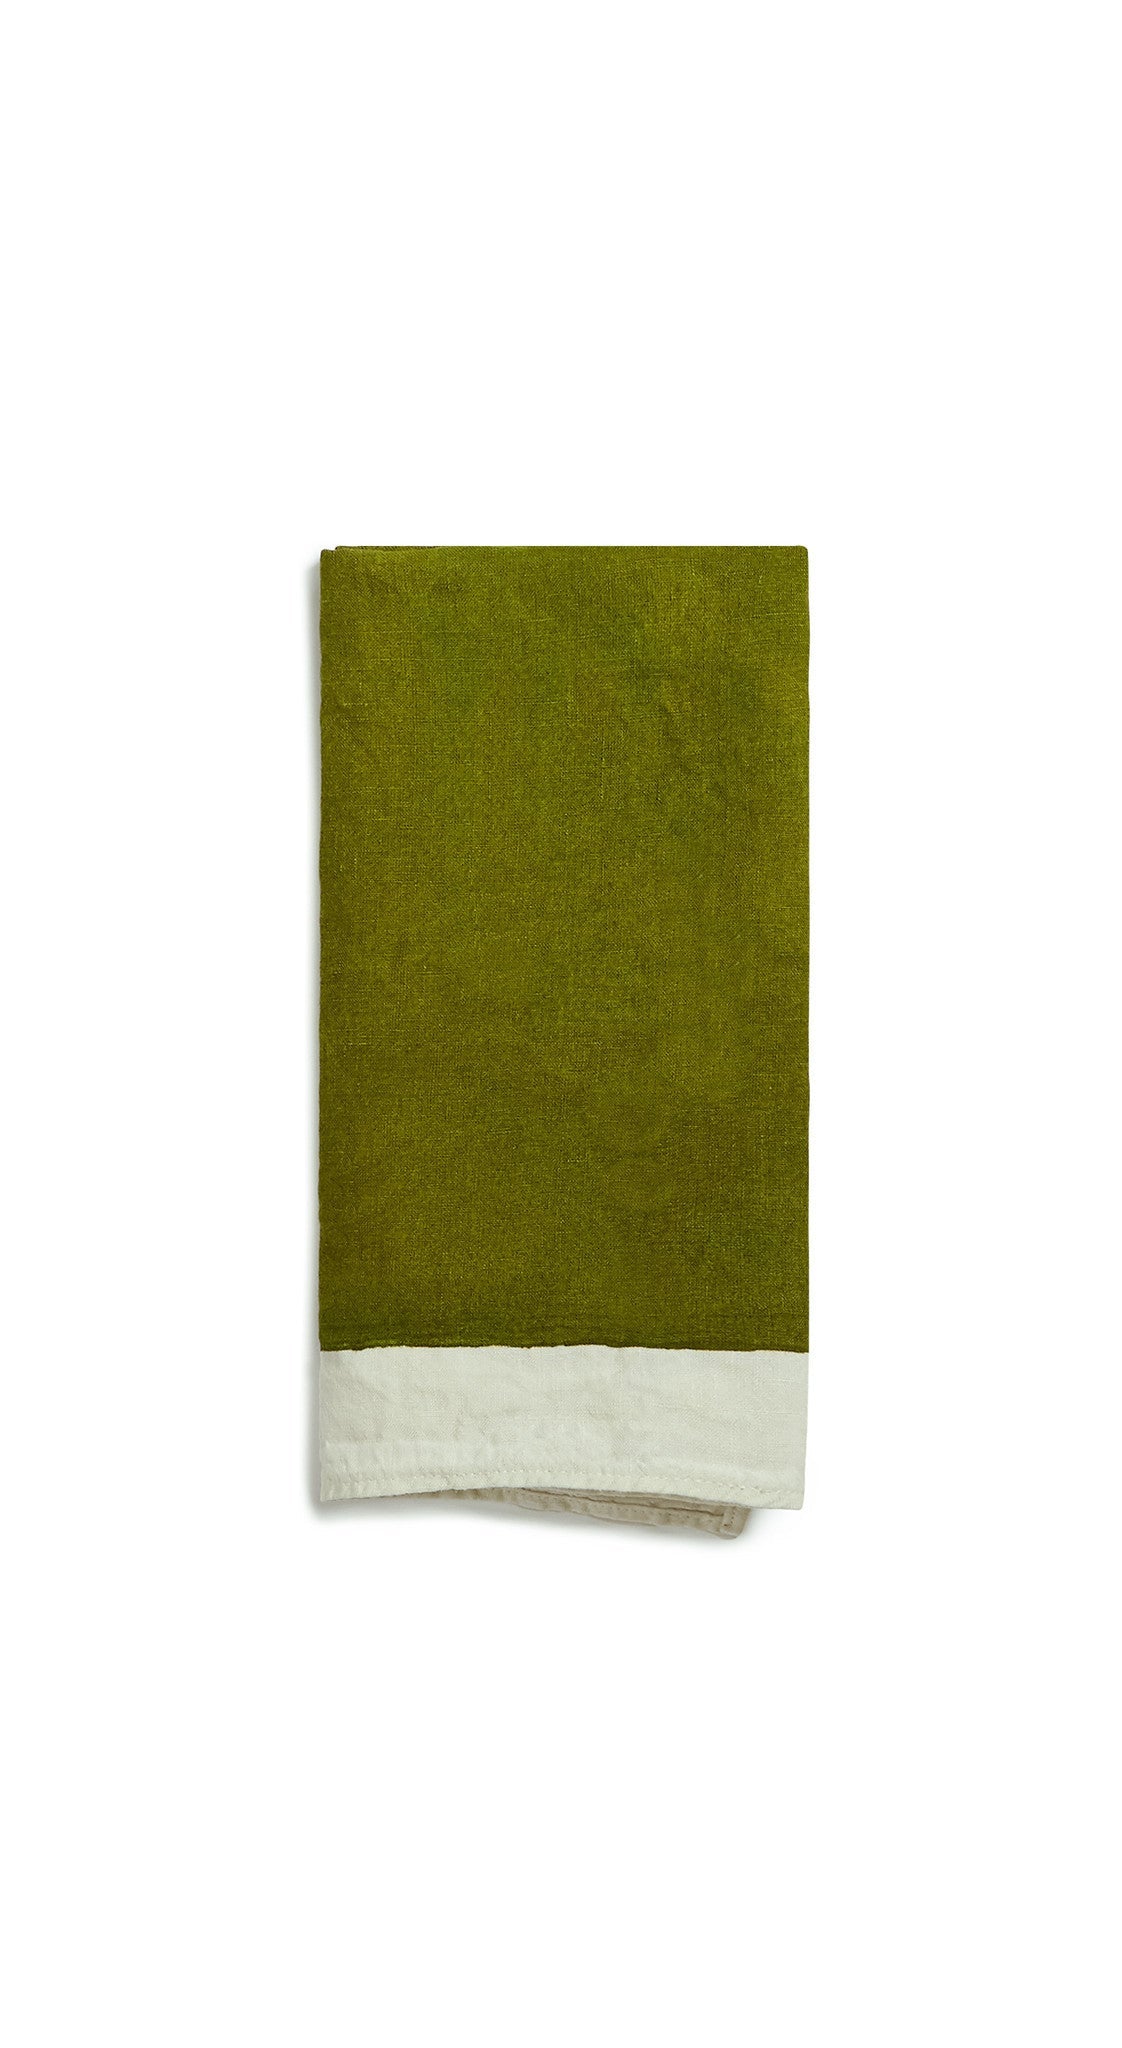 Full Field Linen Napkin in Avocado Green, 50x50cm